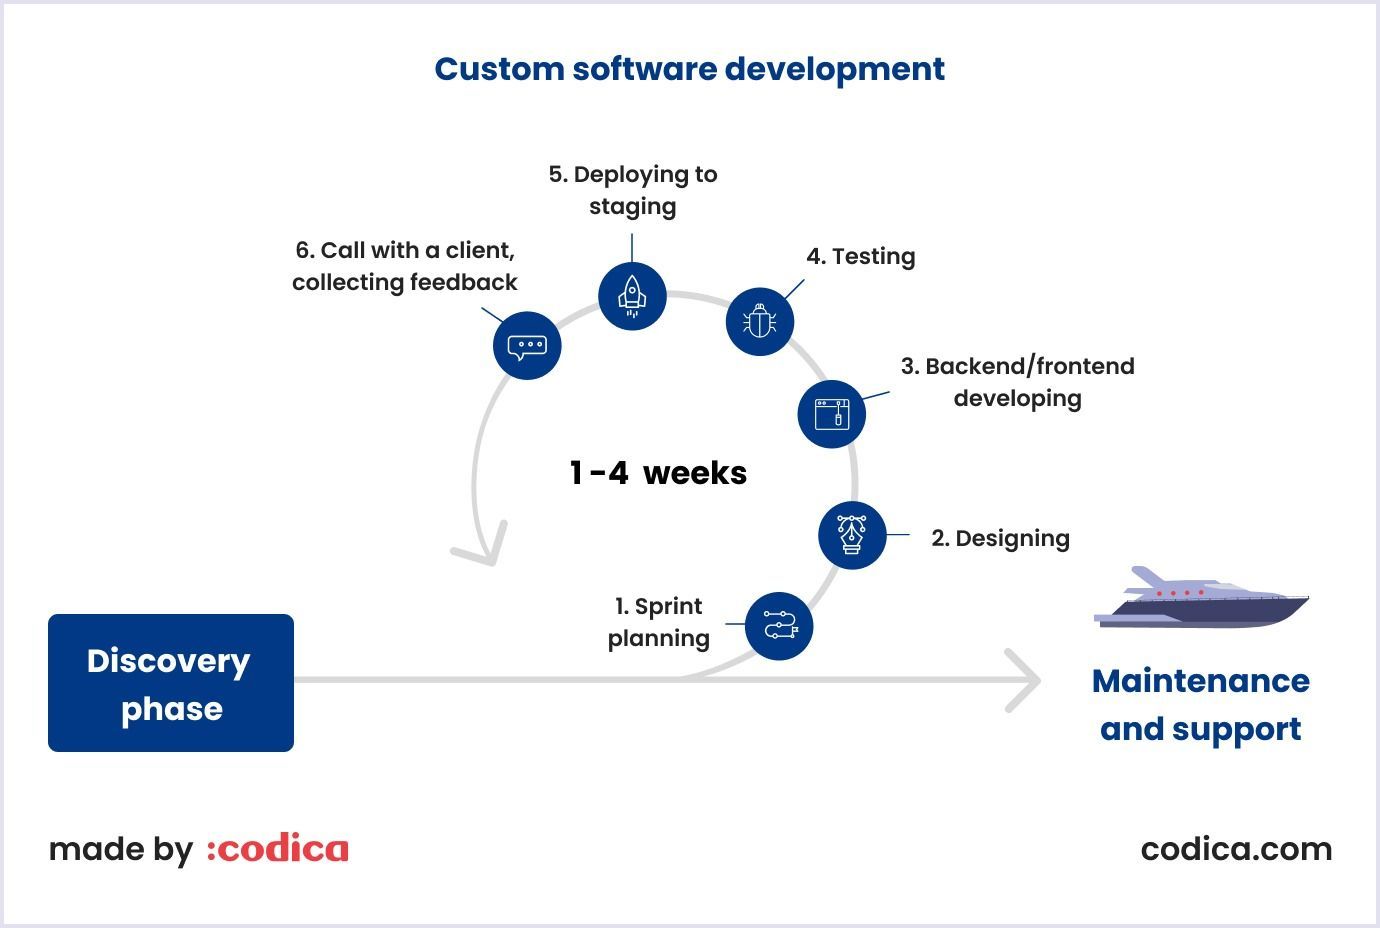 Software development process at Codica